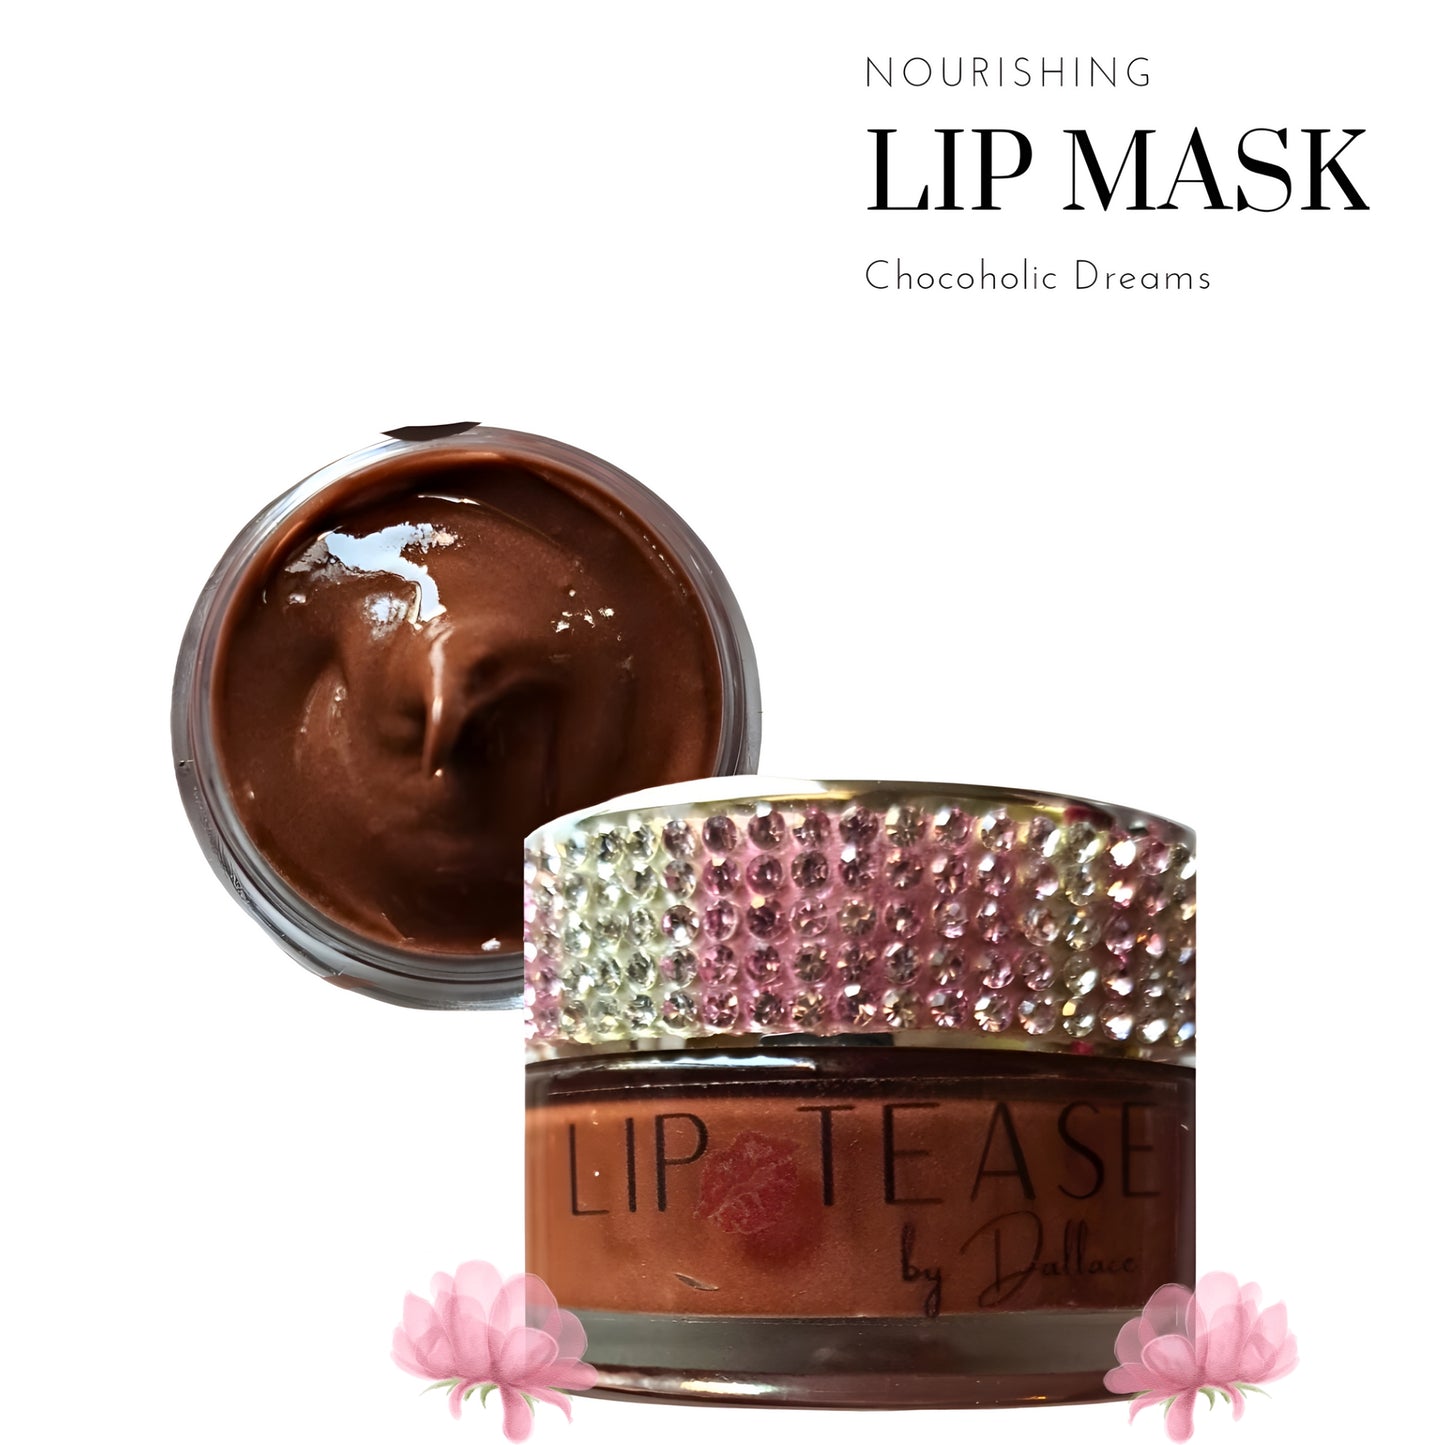 Nourishing Lip Mask Lip Mask Lip Tease by Dallace  Chocoholic Dream Lip Mask (bamboo bling top 15ml) Overnight Sleeping Mask 